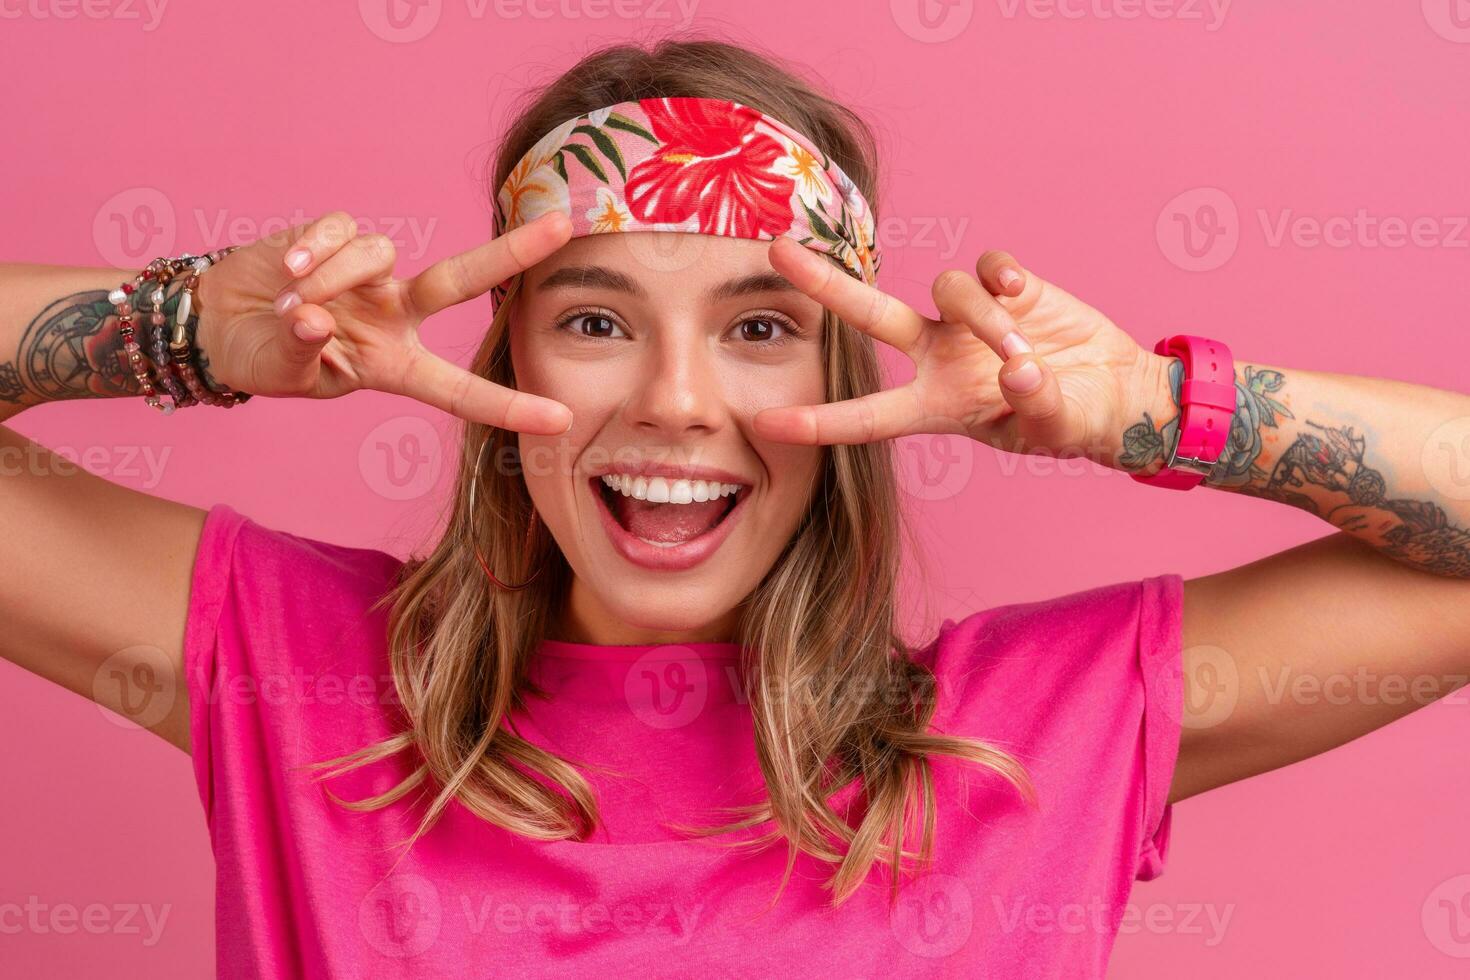 mooi schattig glimlachen vrouw in roze overhemd boho hippie stijl accessoires glimlachen foto